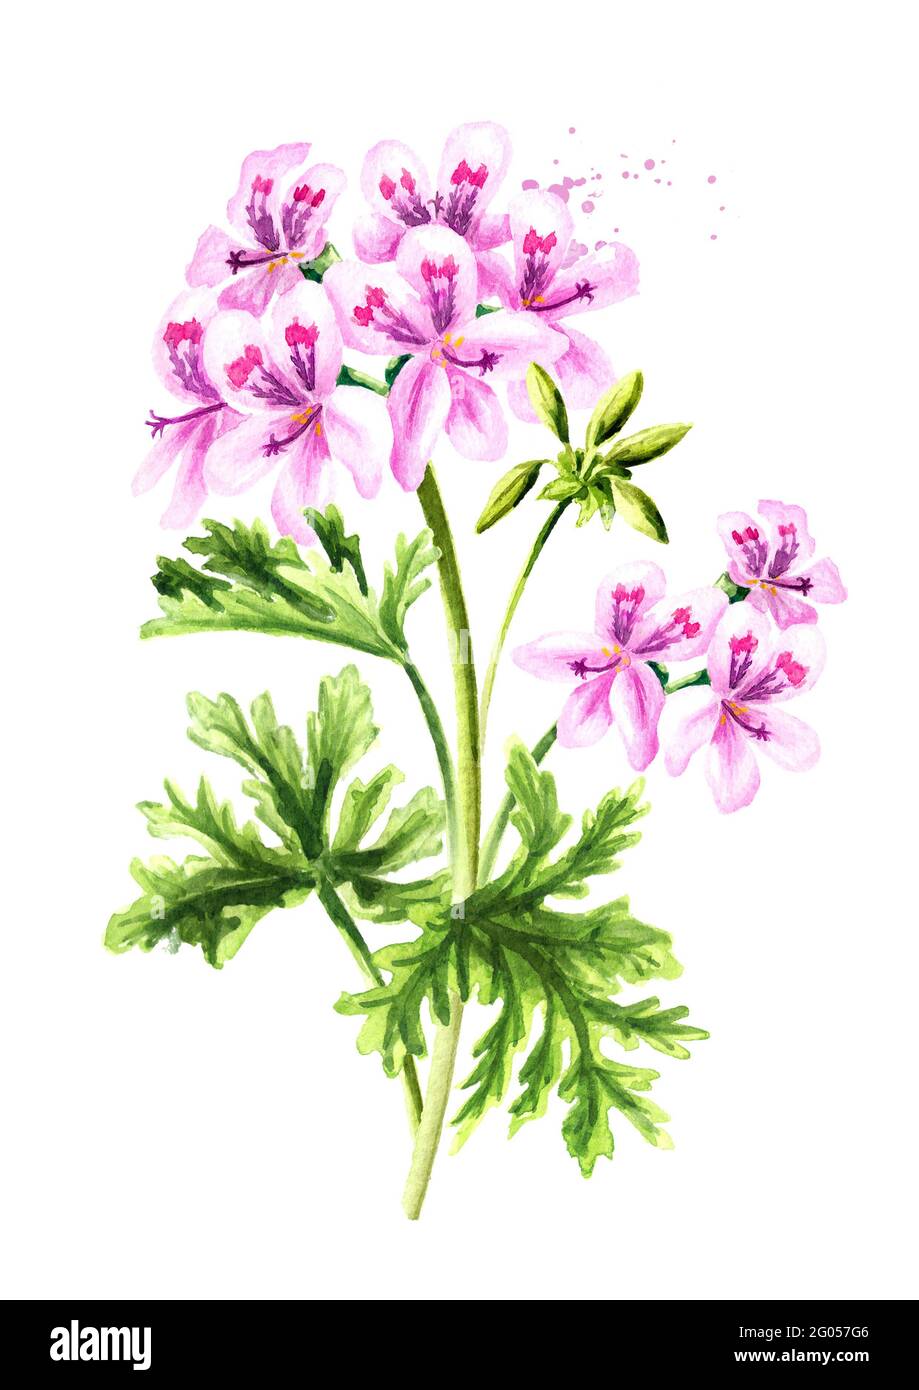 Pelargonium graveolens or Pelargonium x asperum, geranium plant, flower with leaves. Watercolor hand drawn illustration  isolated on white background Stock Photo